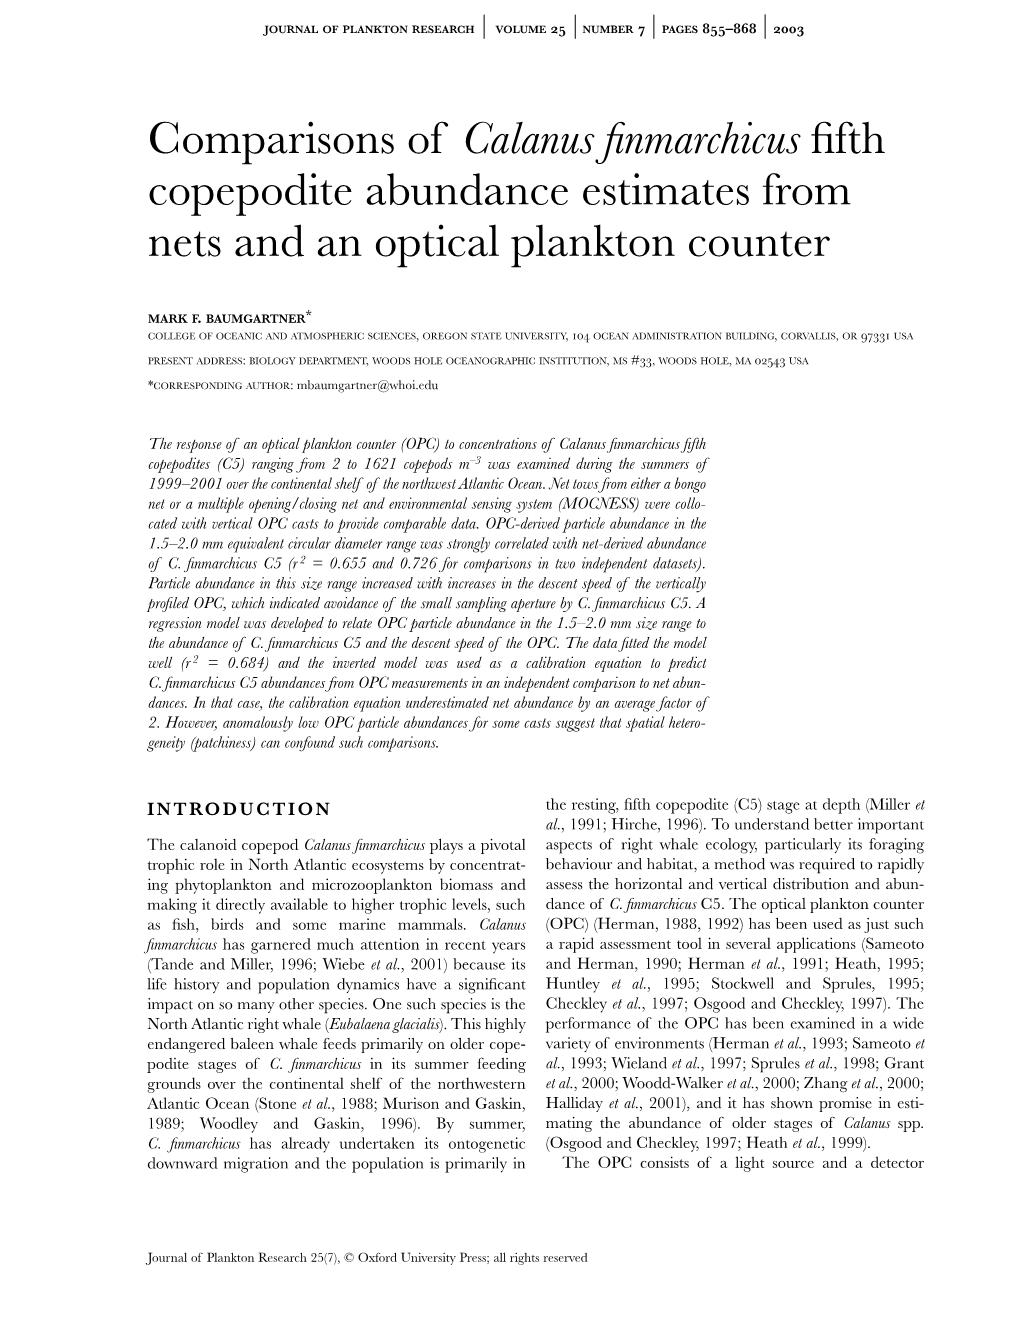 Calanus Finmarchicus C5 Abundance (Copepods M -3) Between OPC Particle Abundance and Net-Derived C5 1 10 100 1000 10000